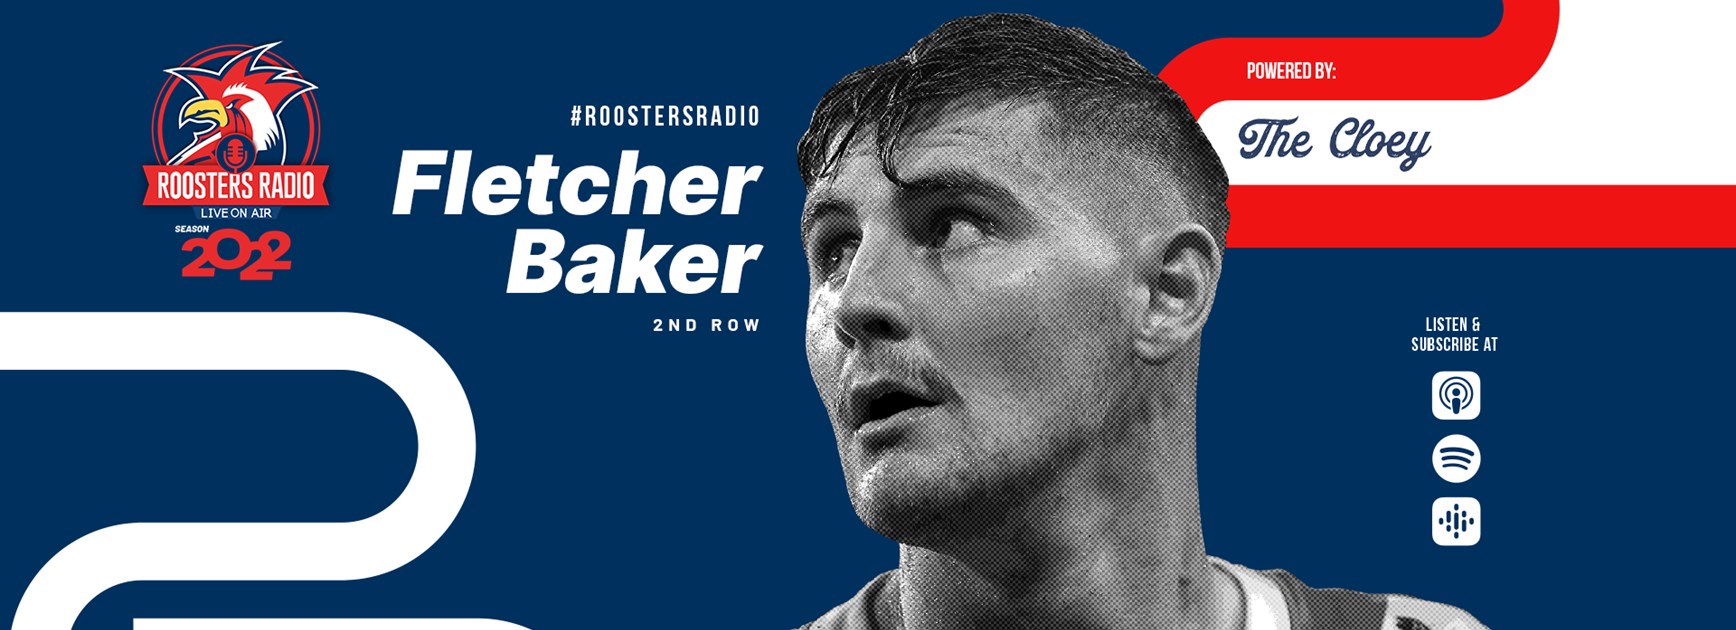 Roosters Radio Ep 131: Fletcher Baker